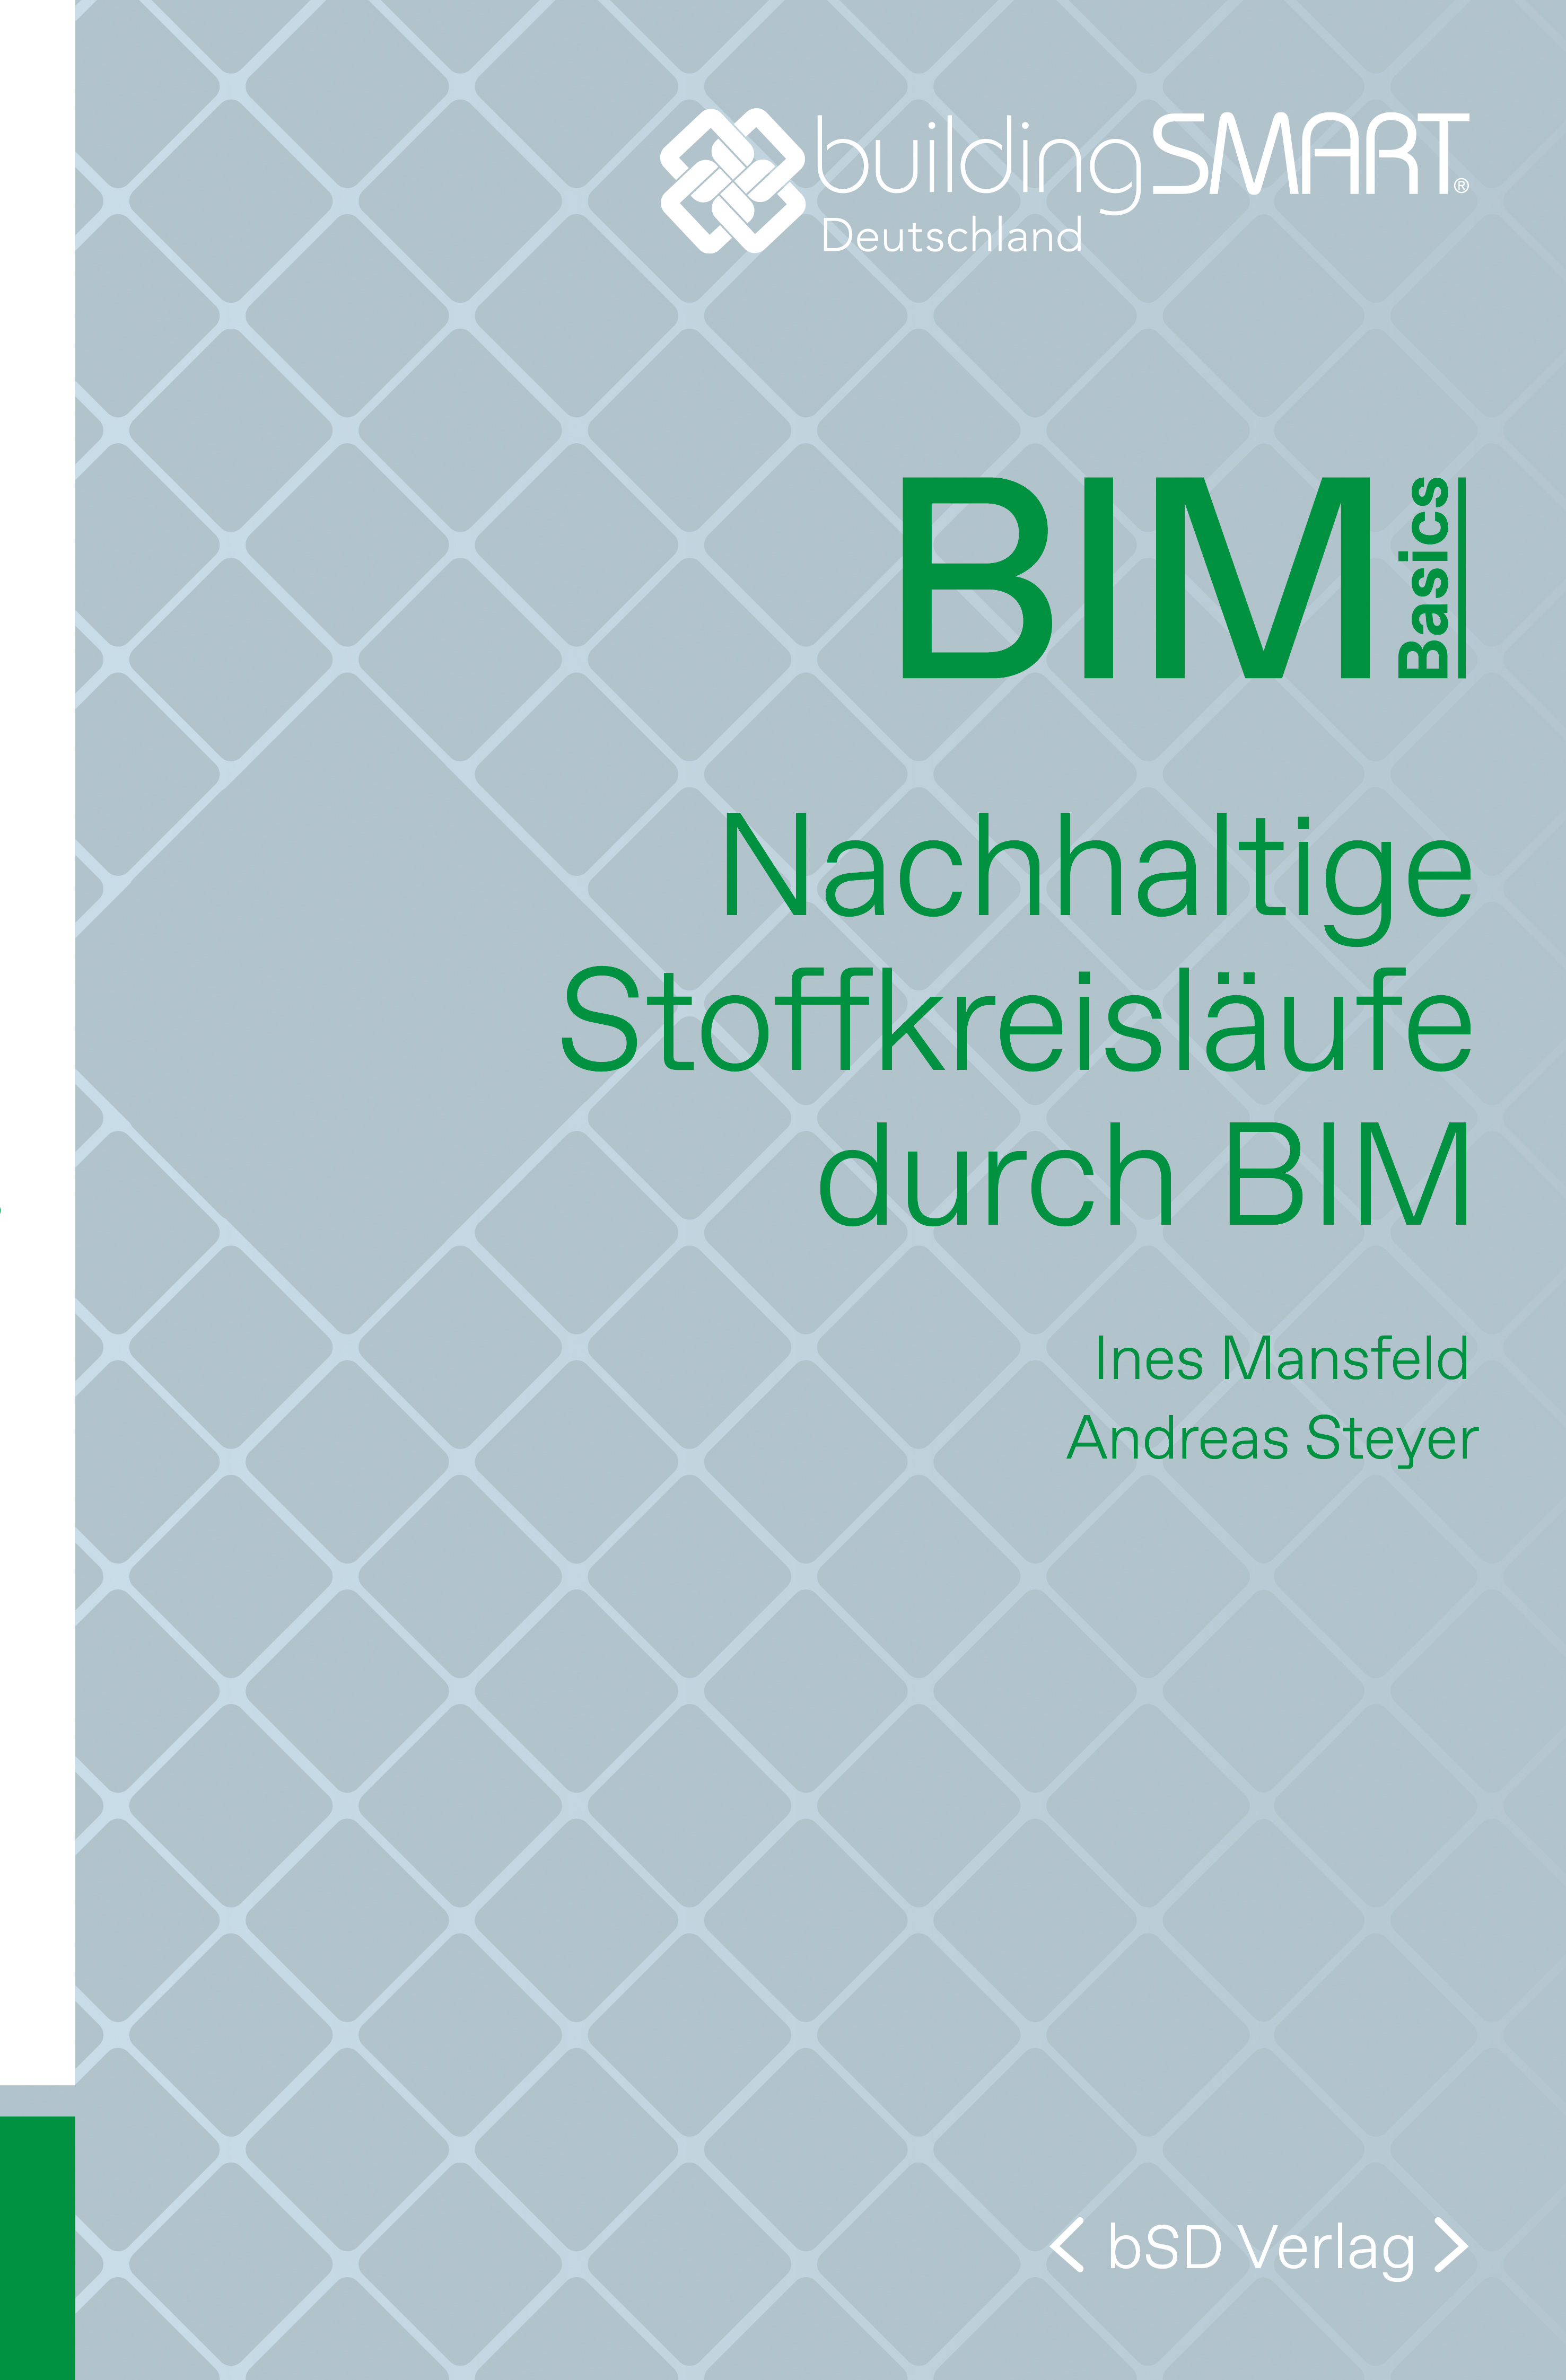 bSD Verlag/BIM Basics: Nachhaltige Stoffkreisläufe